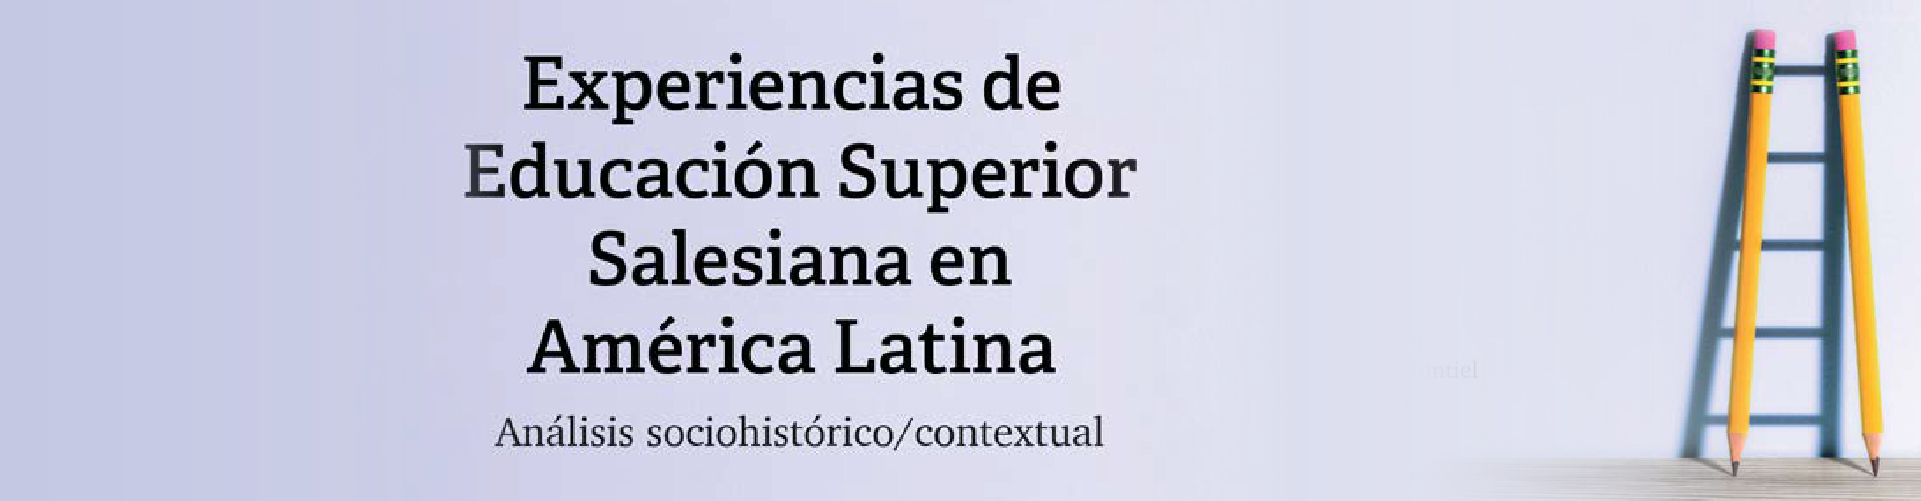 Portada del Libro Experiencias de Educación Superior Salesiana en América Latina. Análisis sociohistórico/contextual